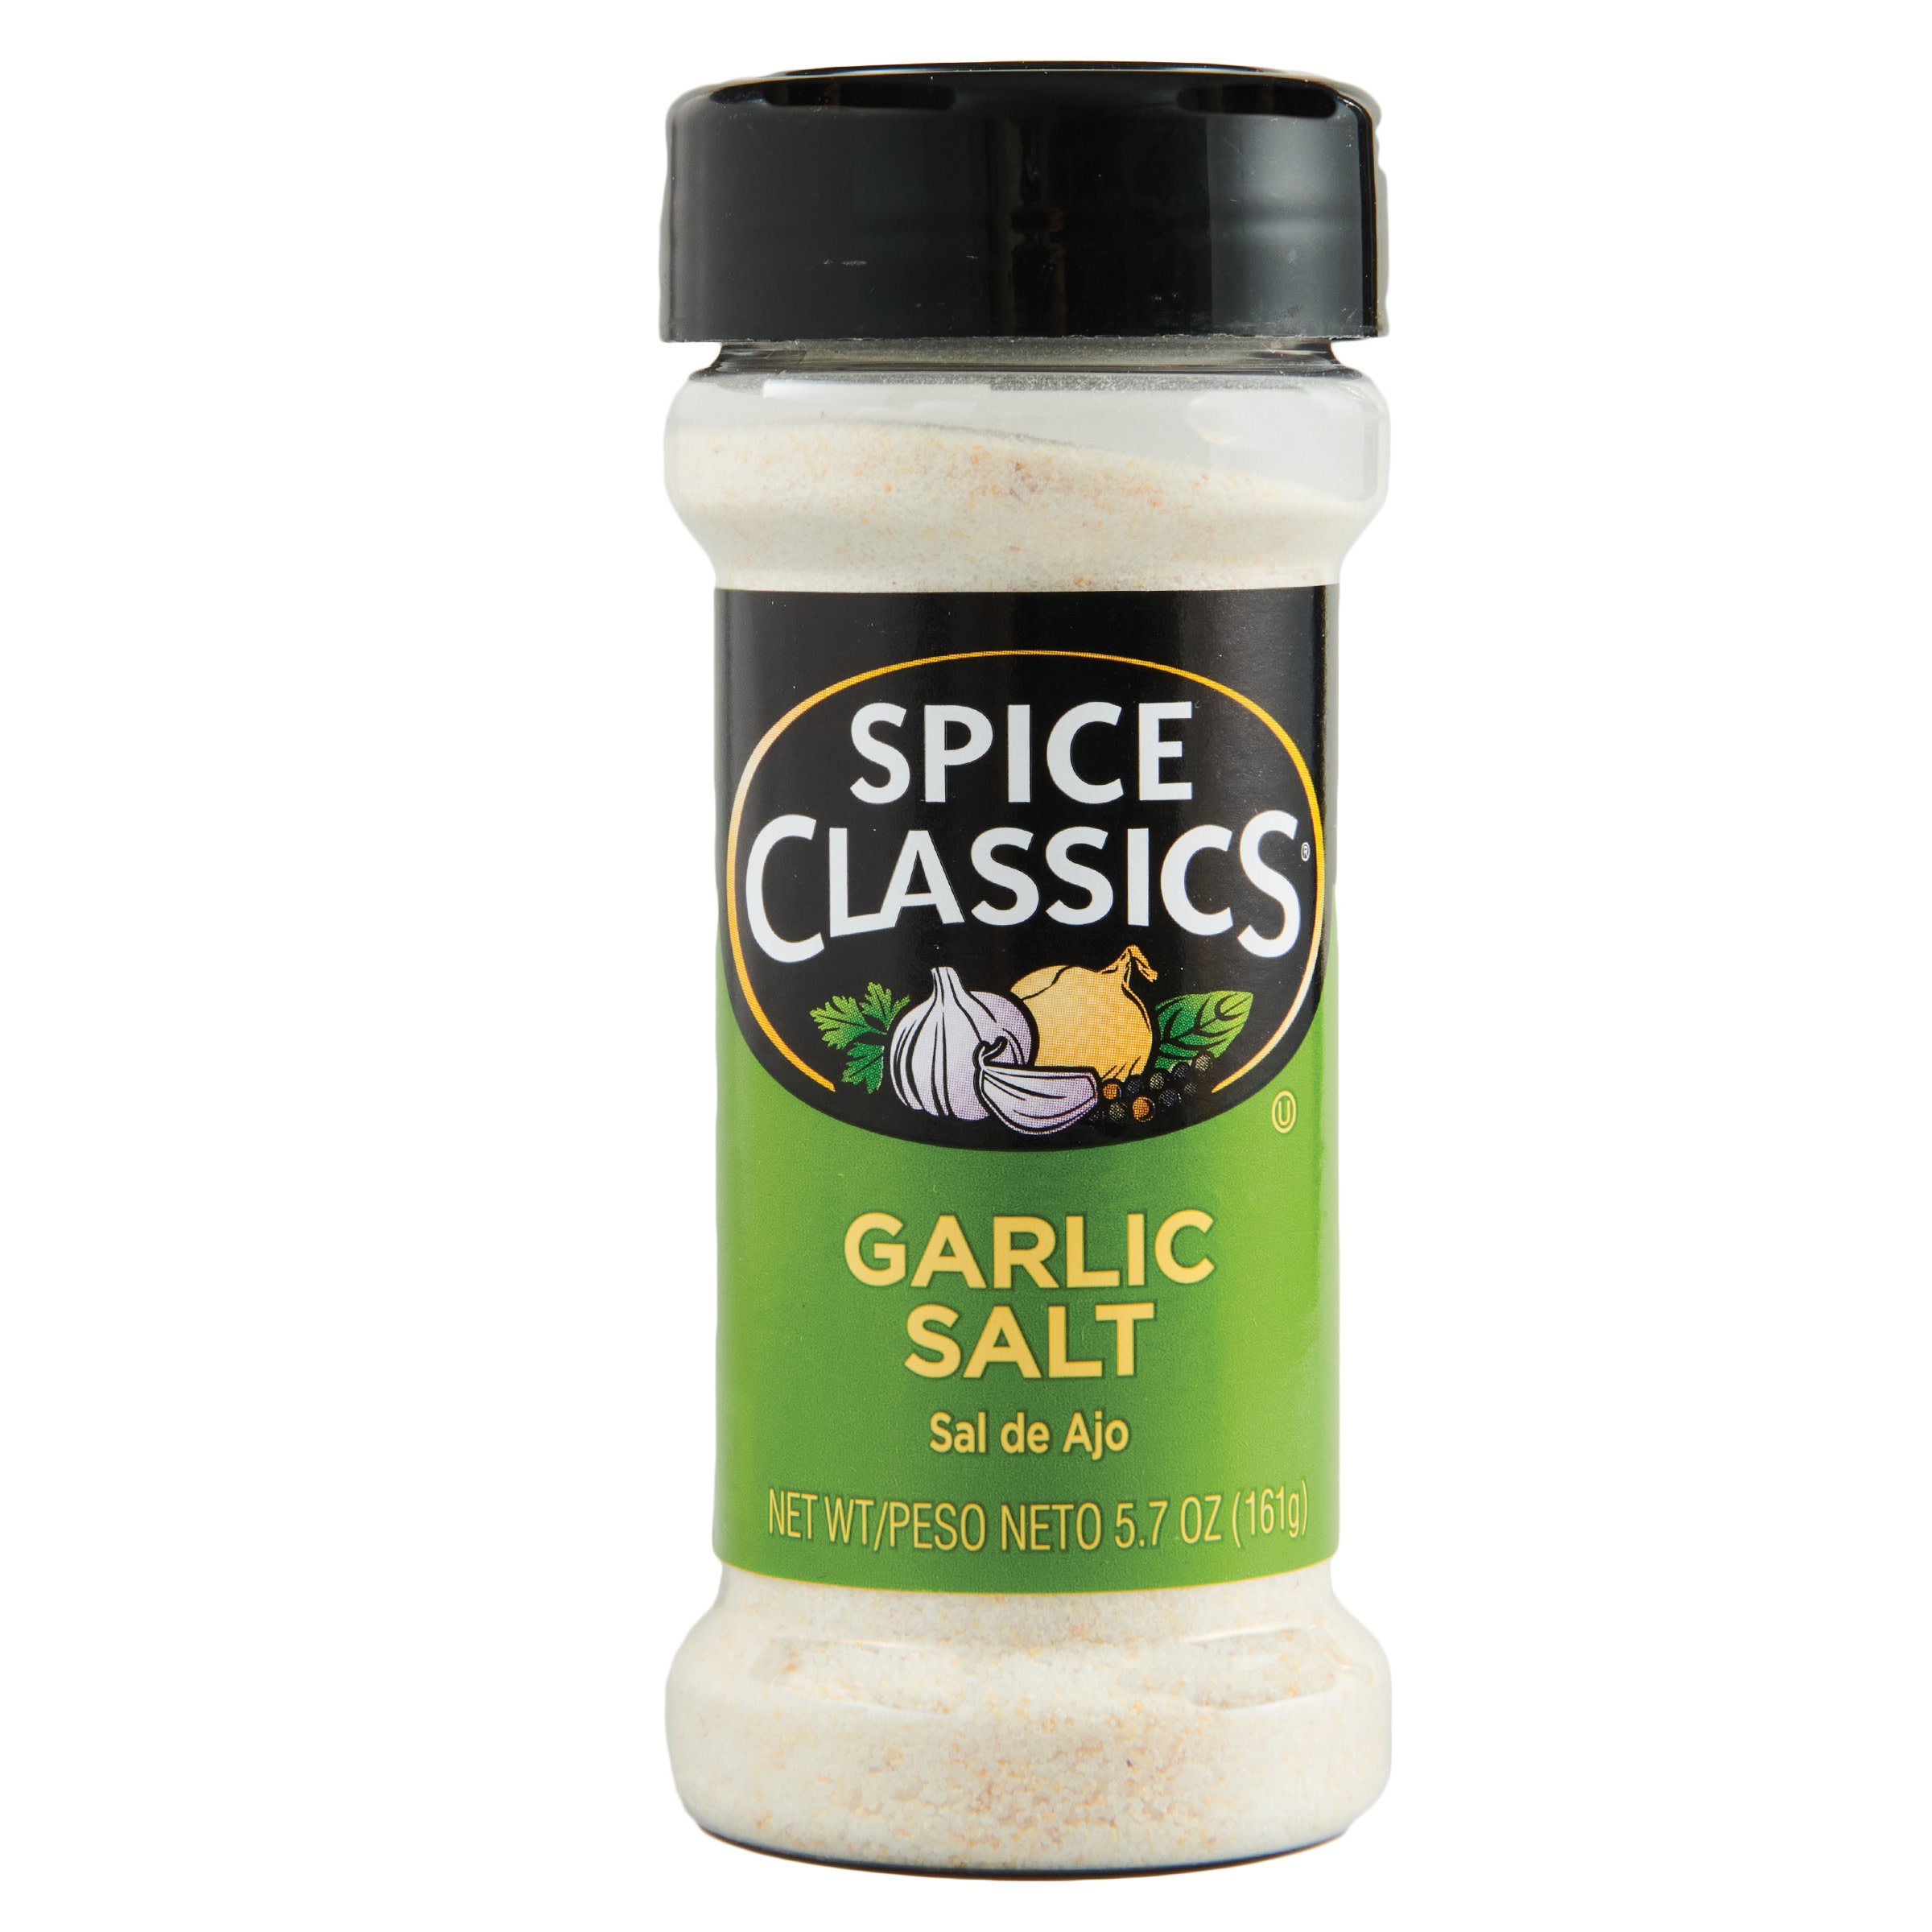 McCormick Salt Free Garlic & Herb Seasoning - Shop Spice Mixes at H-E-B